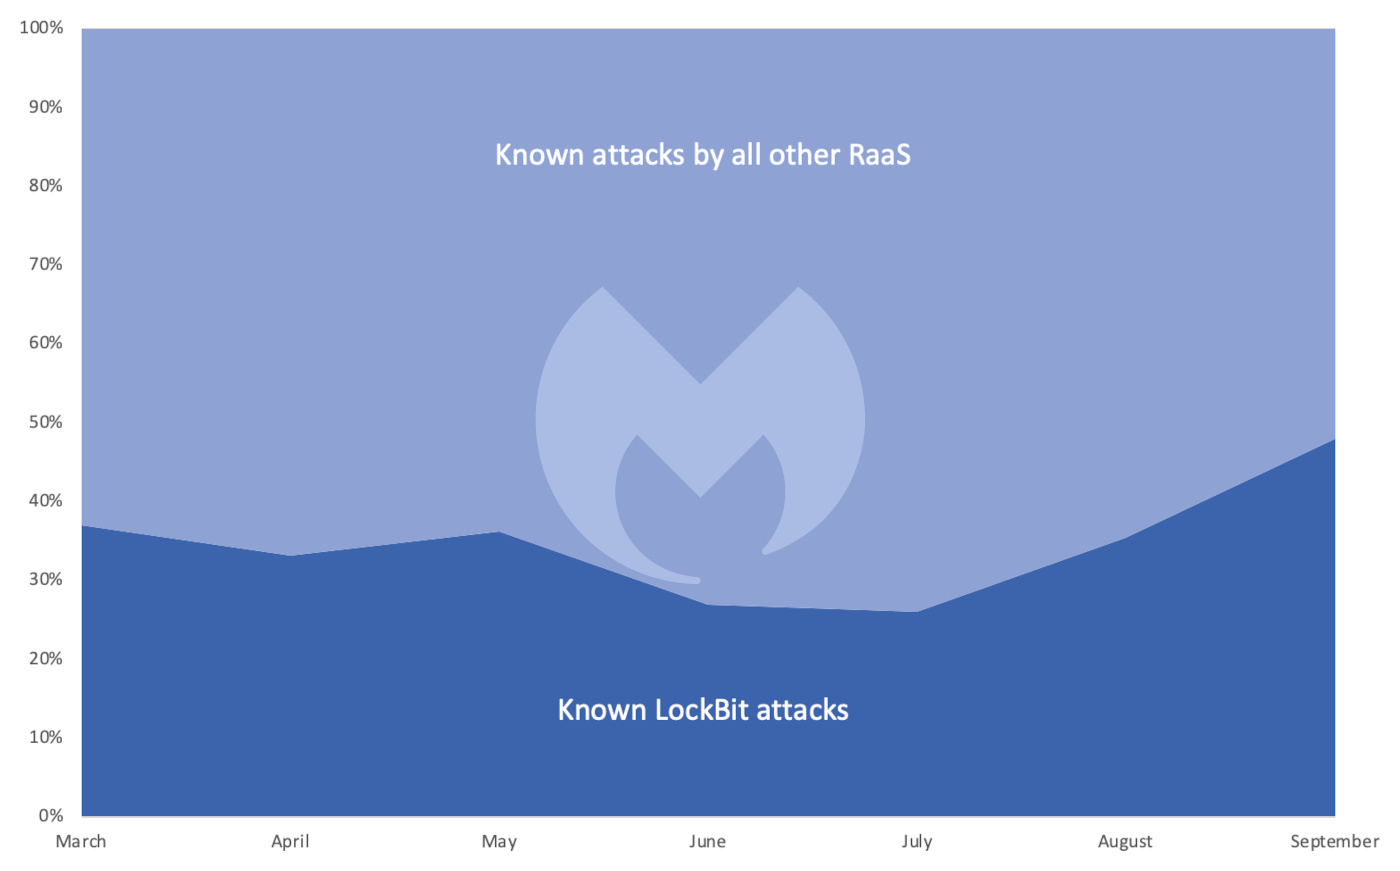 The percentage of known RaaS attacks involving LockBit